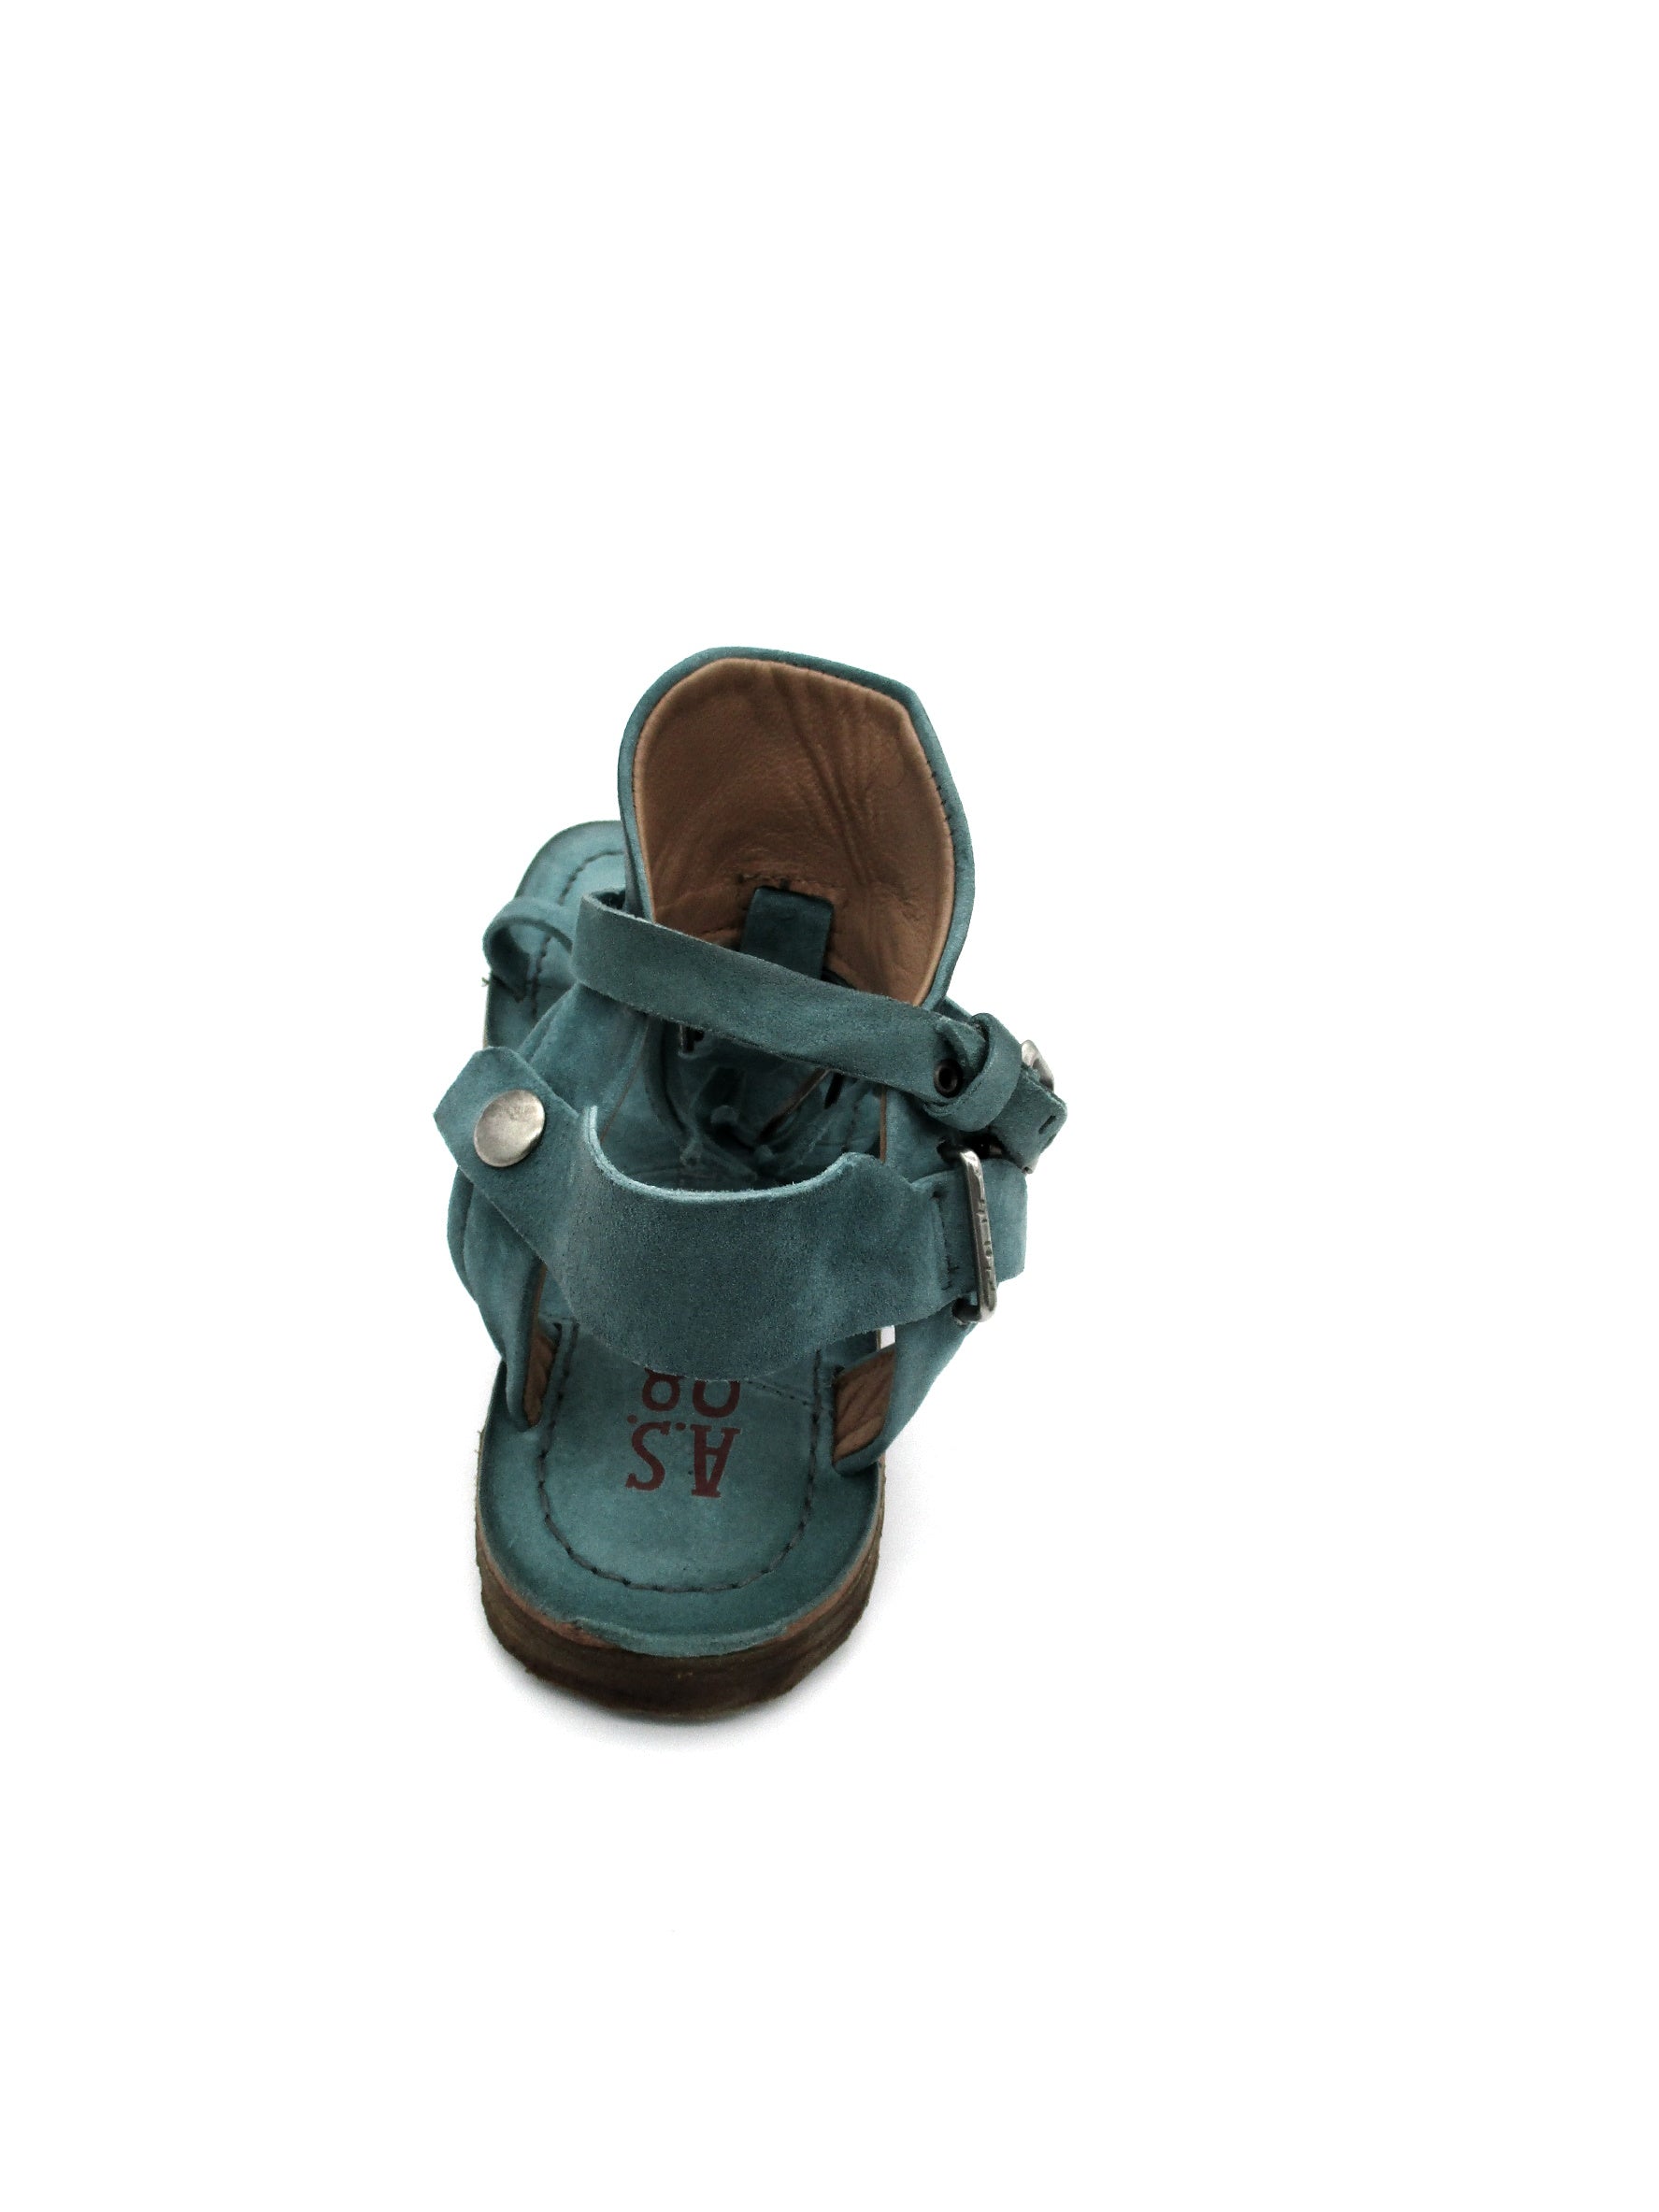 Sandalo basso pelle donna AS98 Emerald - 534010 -